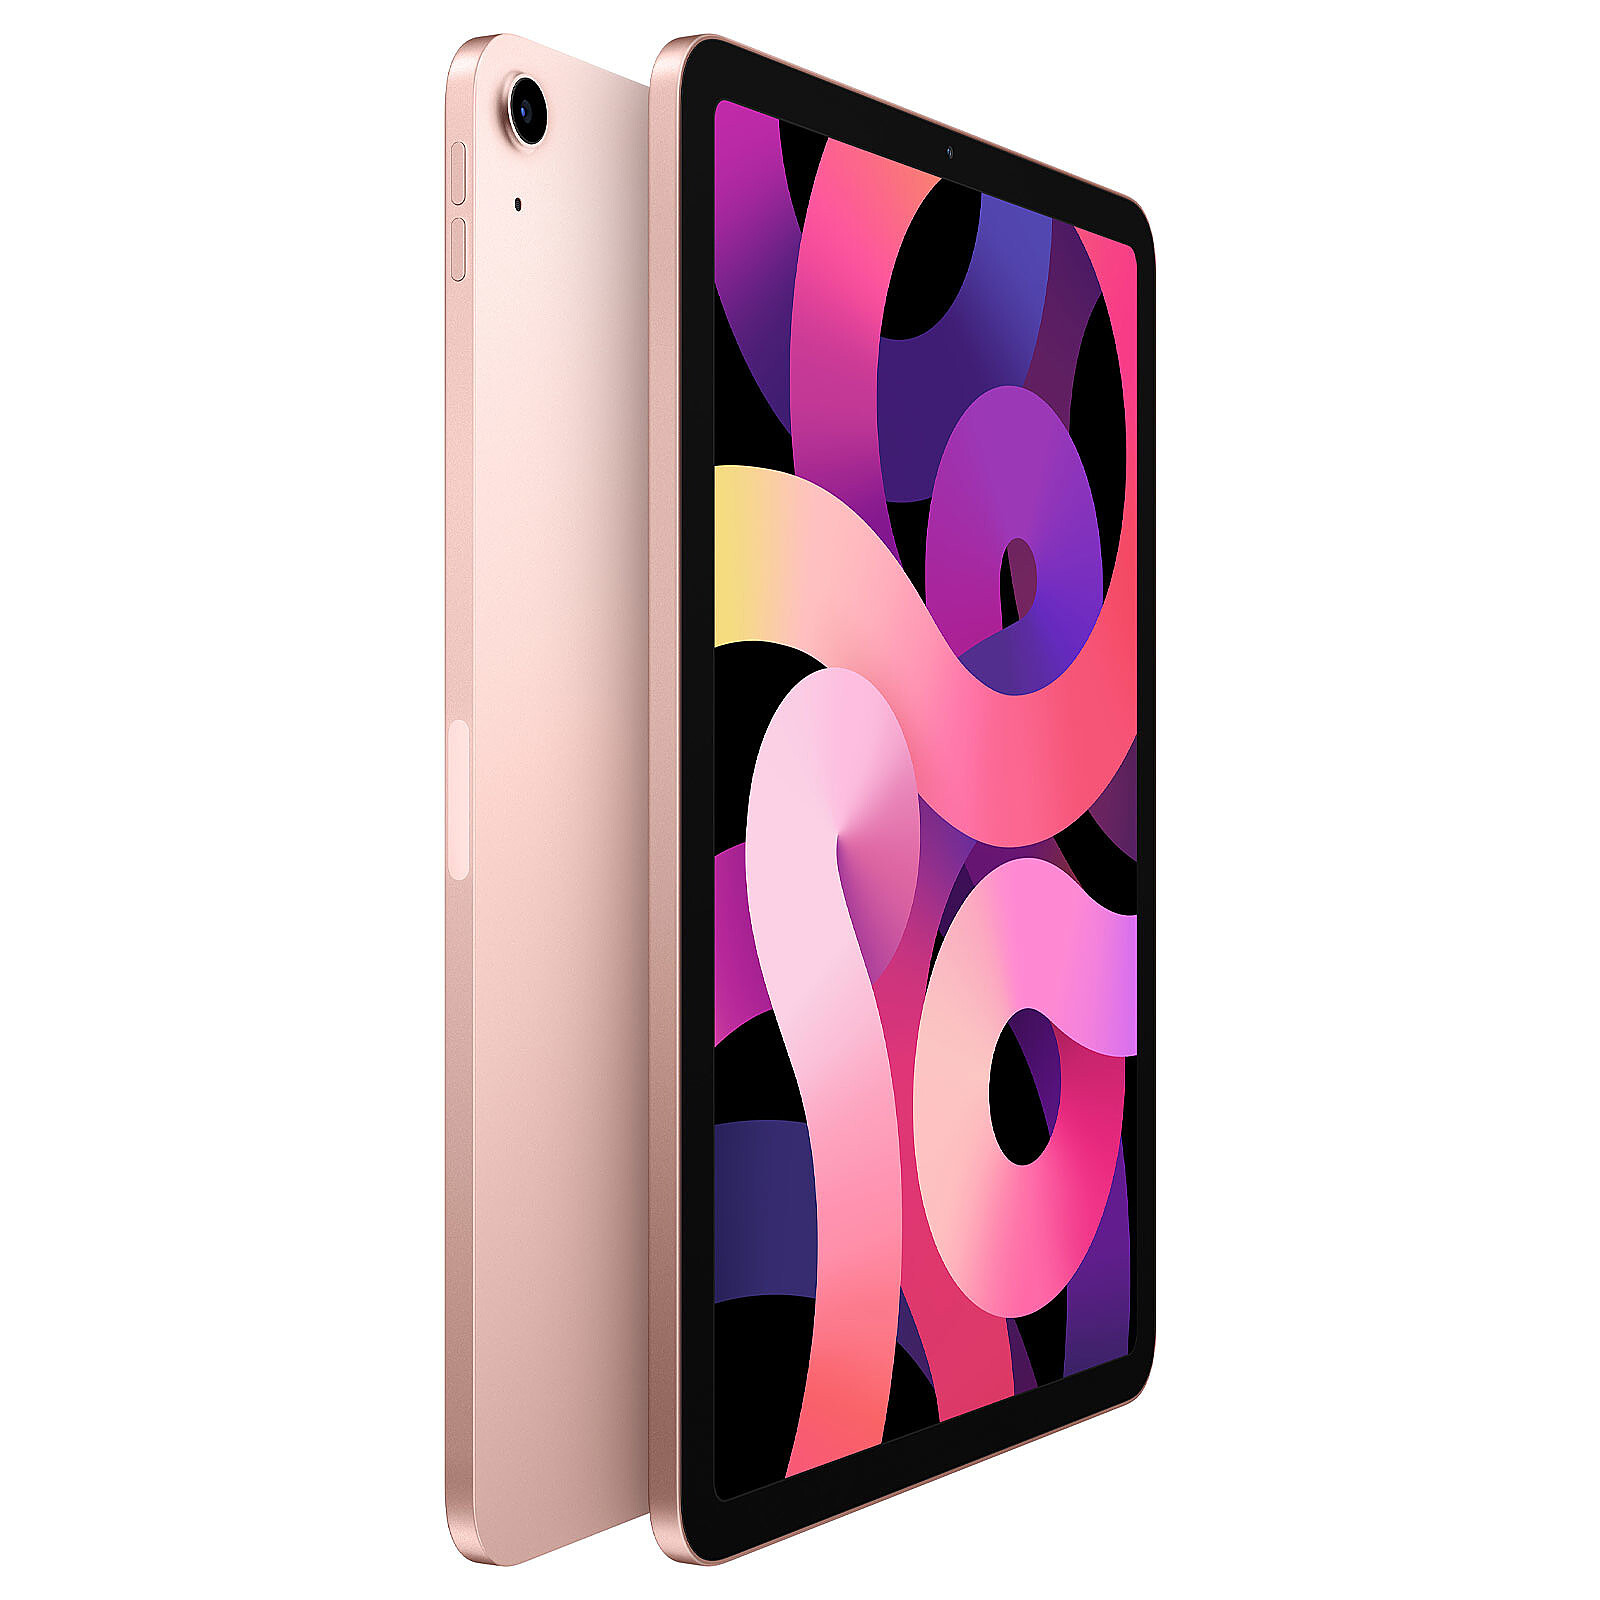 Apple iPad Pro (2020) 11-inch 256GB Wi-Fi Silver - Tablet computer - LDLC  3-year warranty